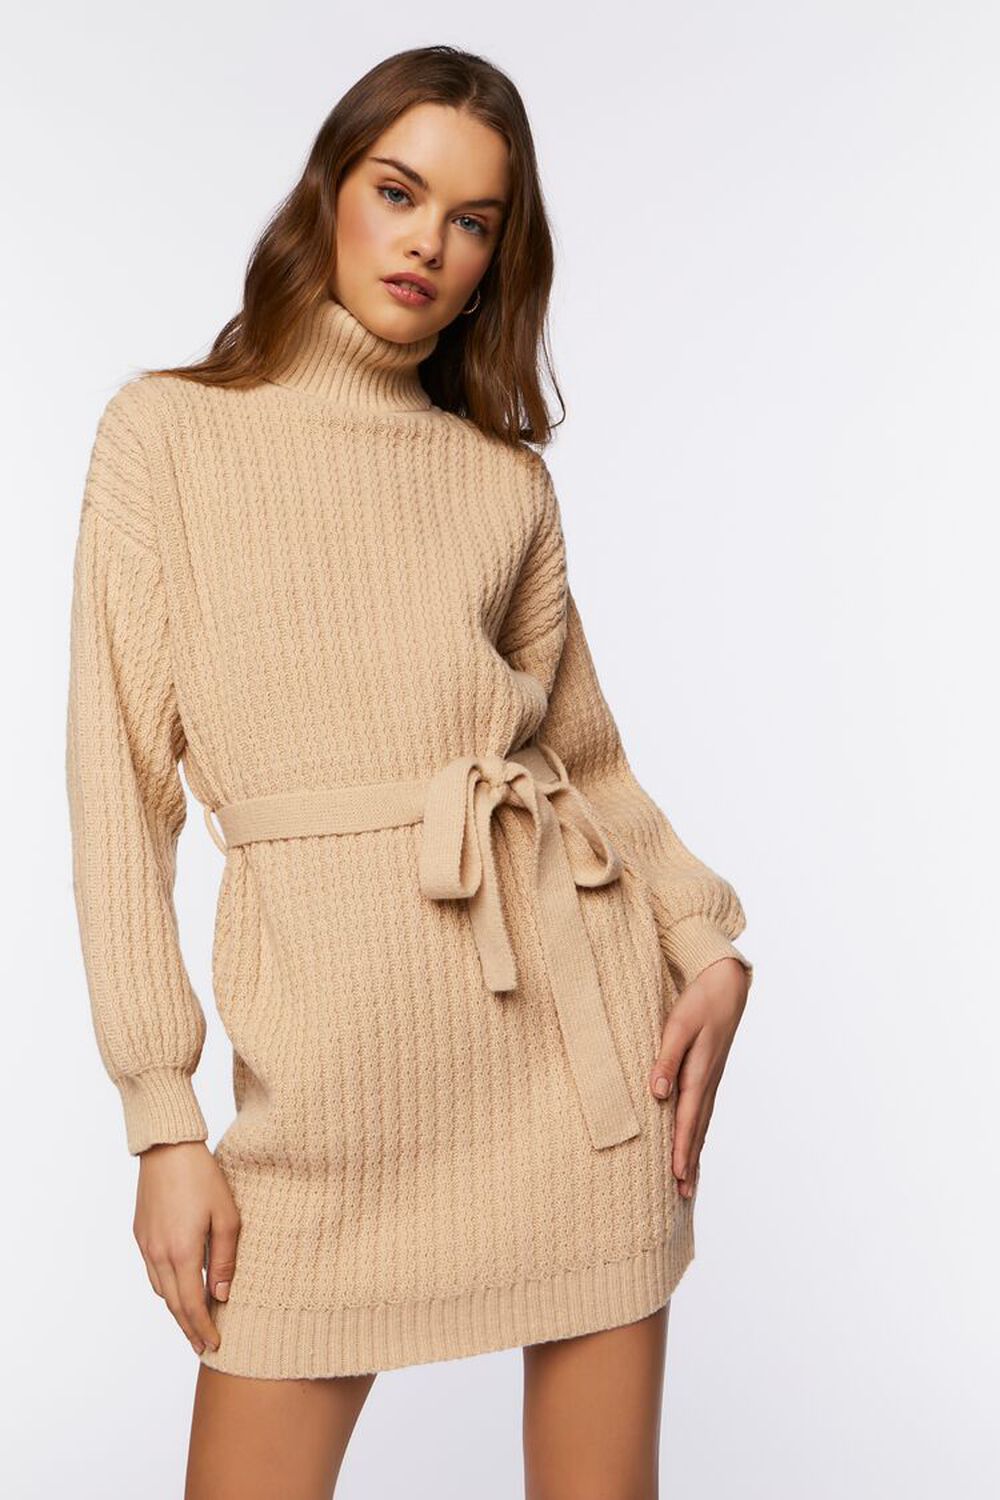 OATMEAL Turtleneck Mini Sweater Dress, image 1